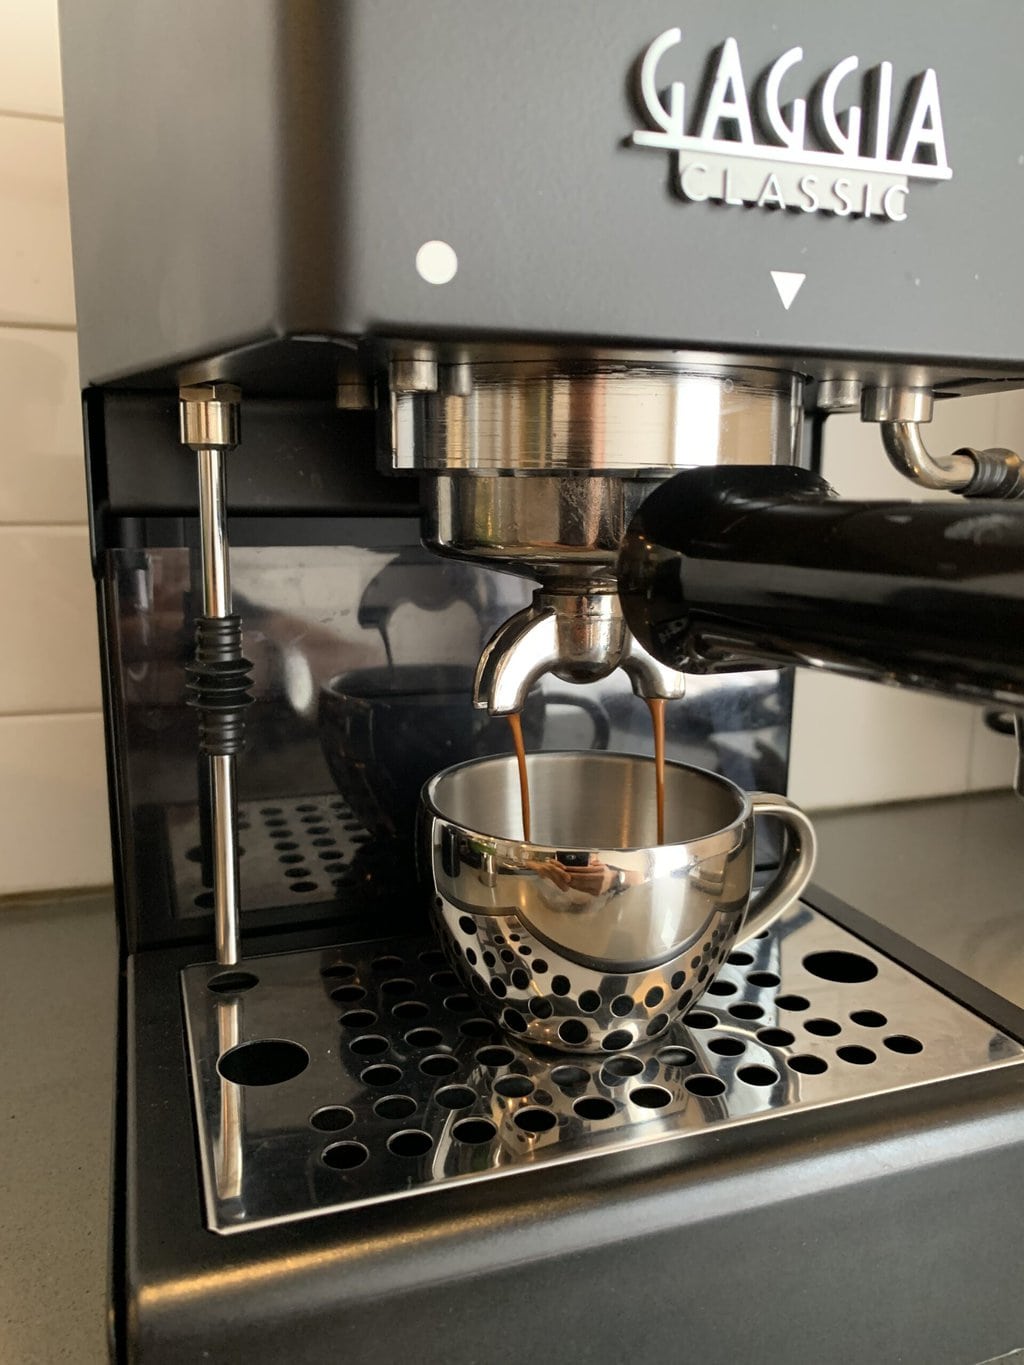 the process of brewing coffee in the Gaggia Classic espresso machine